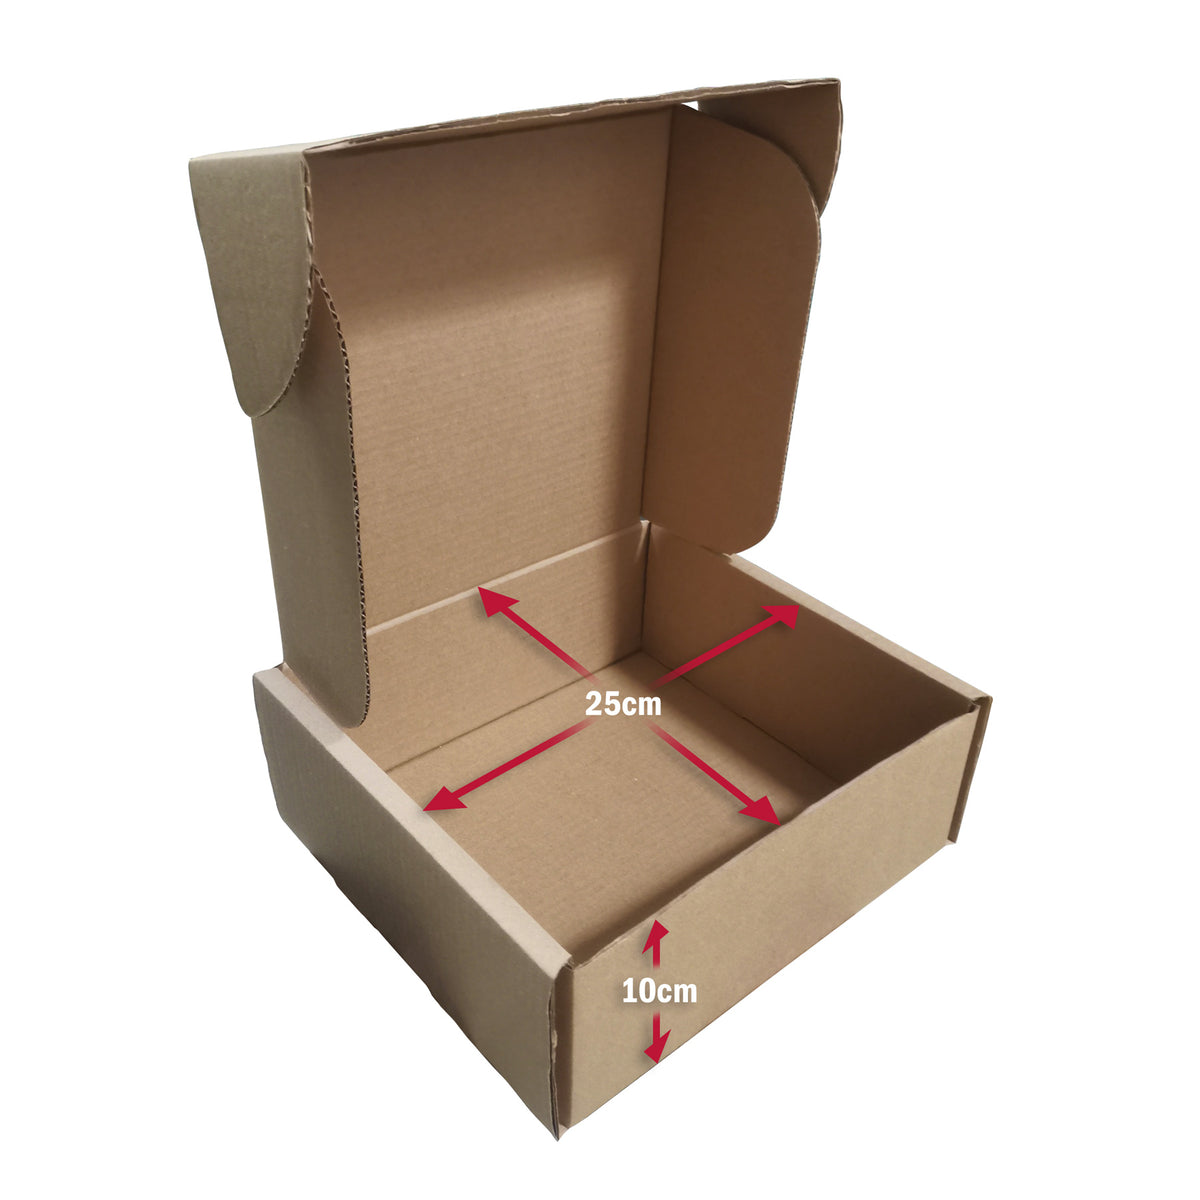 Caja para envíos plana mediana medida 26.5x19.5x6cm - Packaging Solutions .